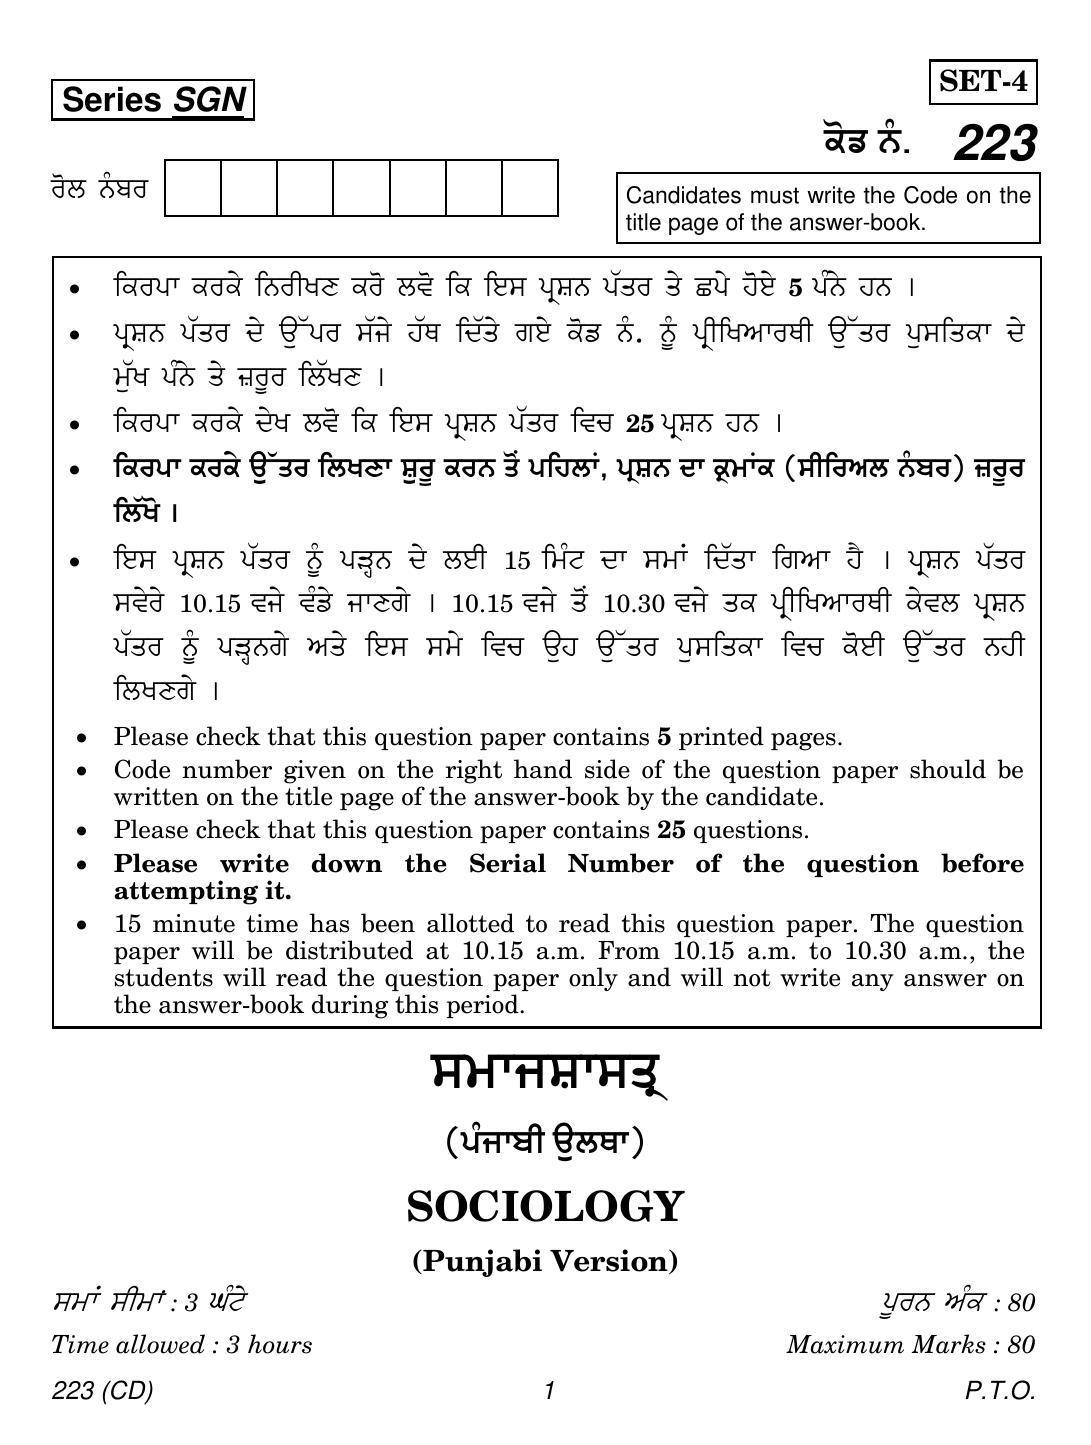 CBSE Class 12 223 (Sociology Punjabi CD) 2018 Question Paper - Page 1